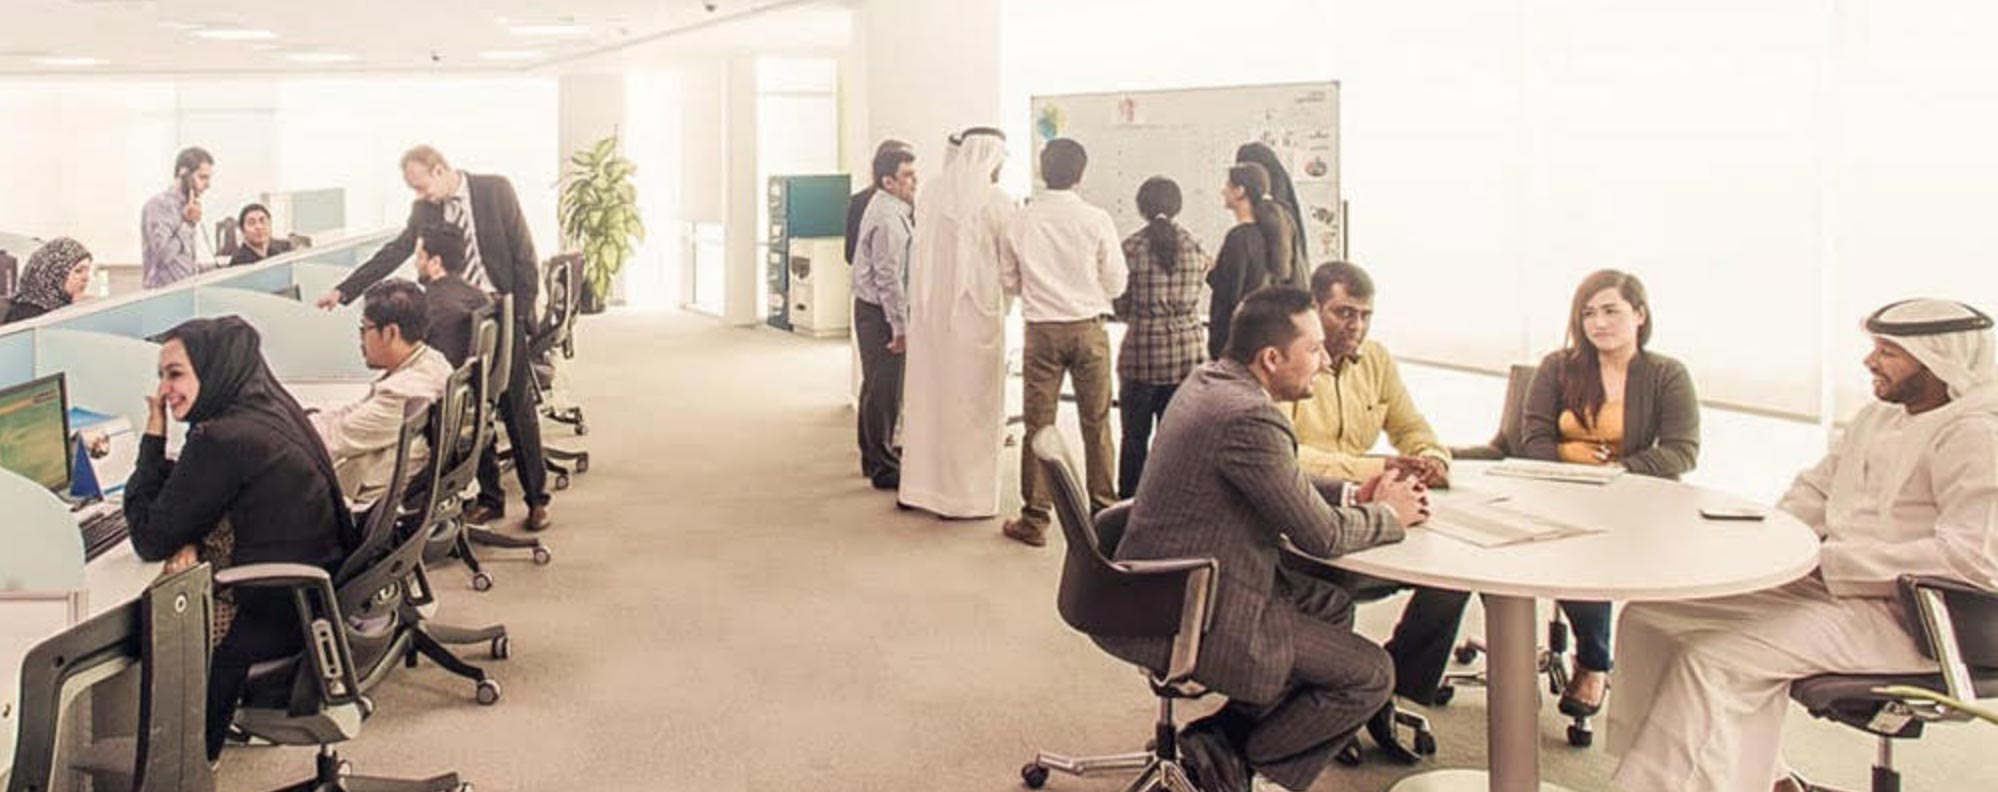 Emirates NBD - Office